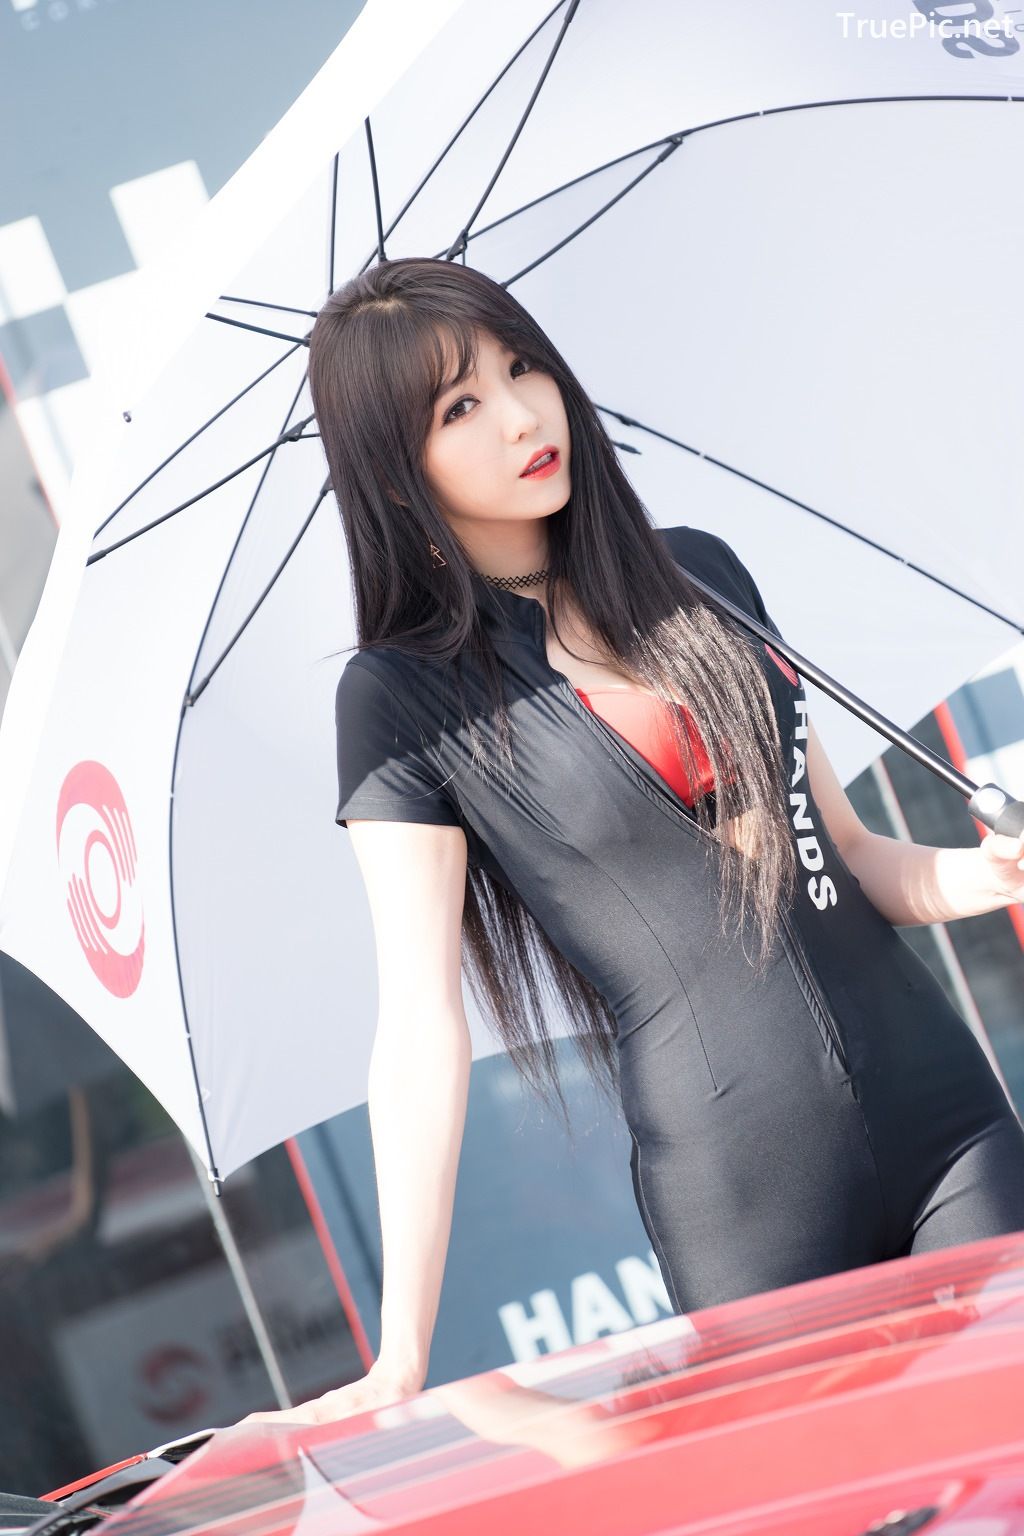 Image-Korean-Racing-Model-Lee-Eun-Hye-At-Incheon-Korea-Tuning-Festival-TruePic.net- Picture-215